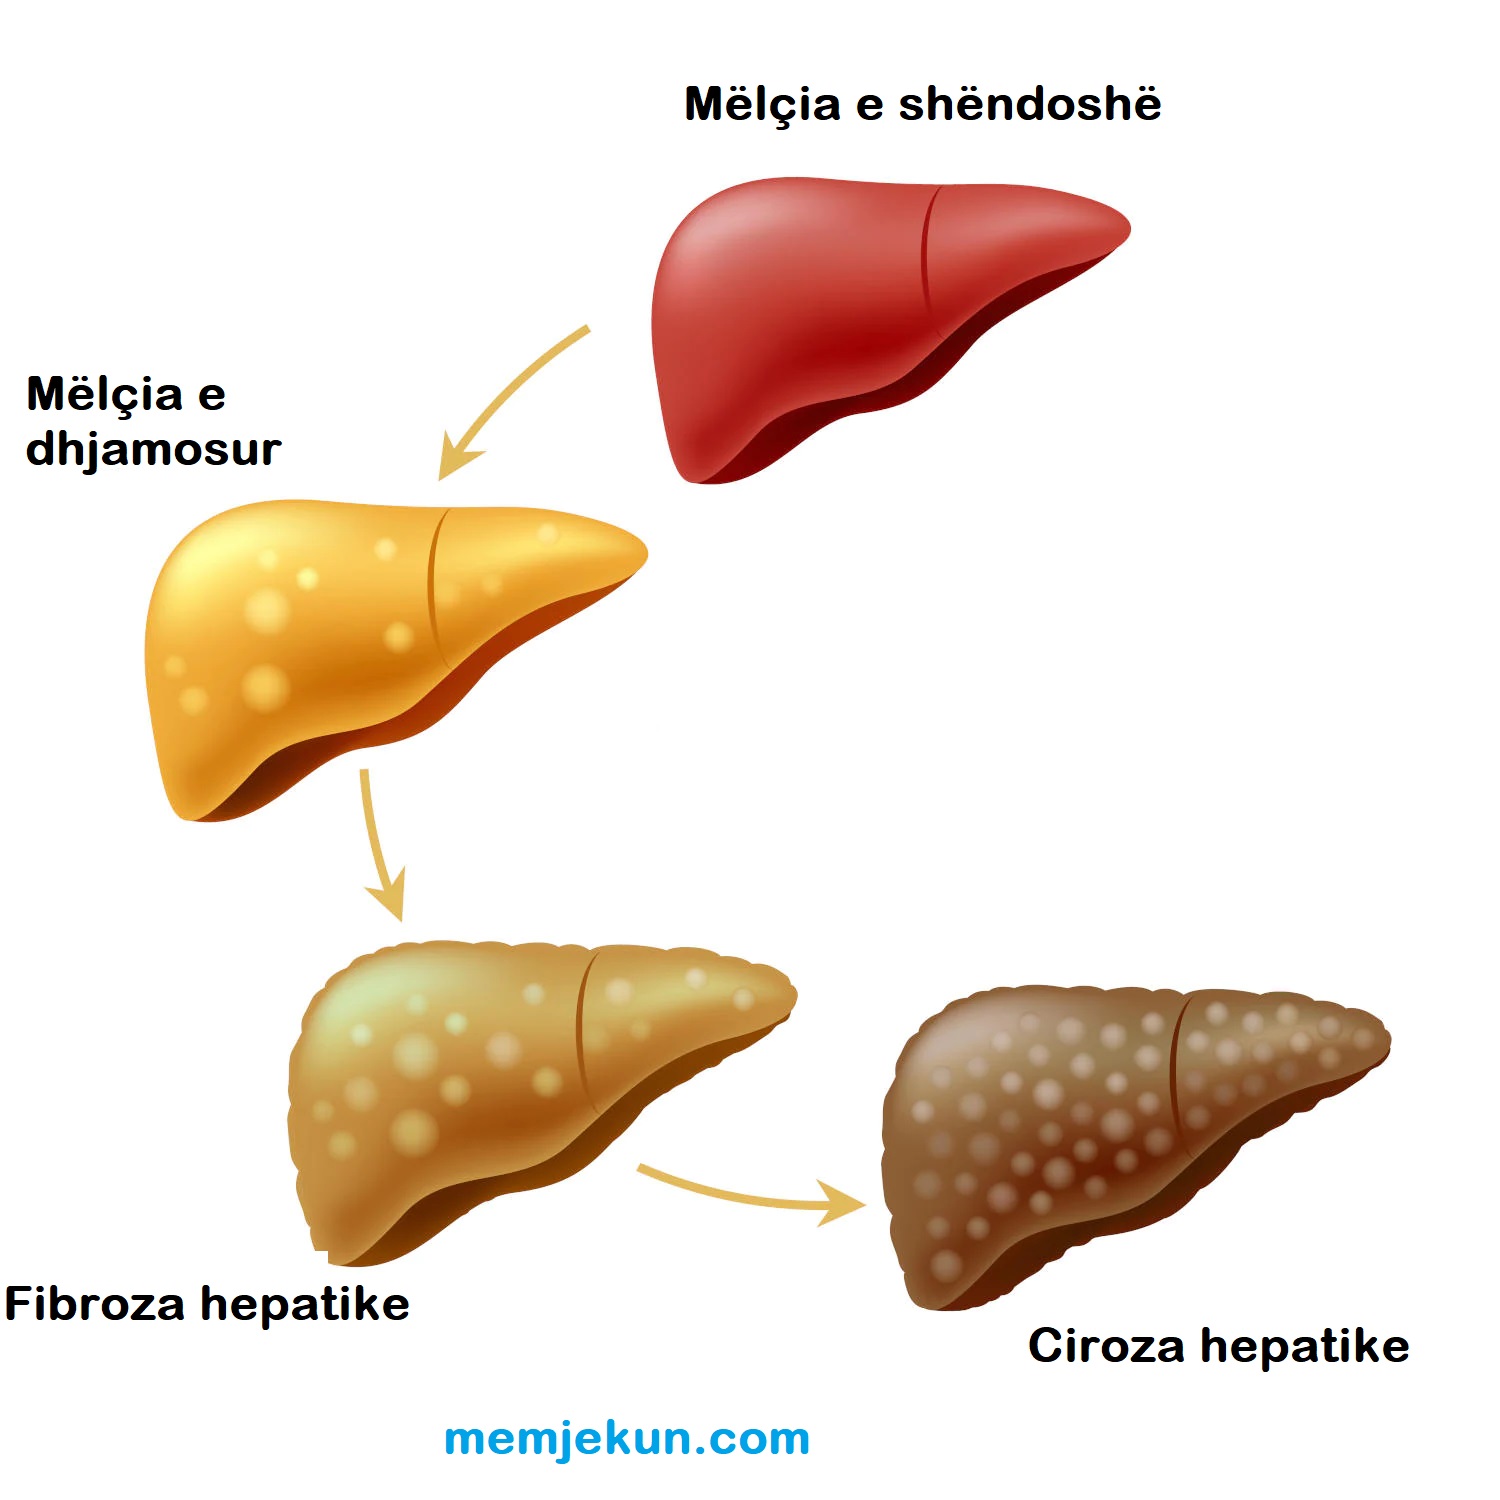 fibroza hepatike